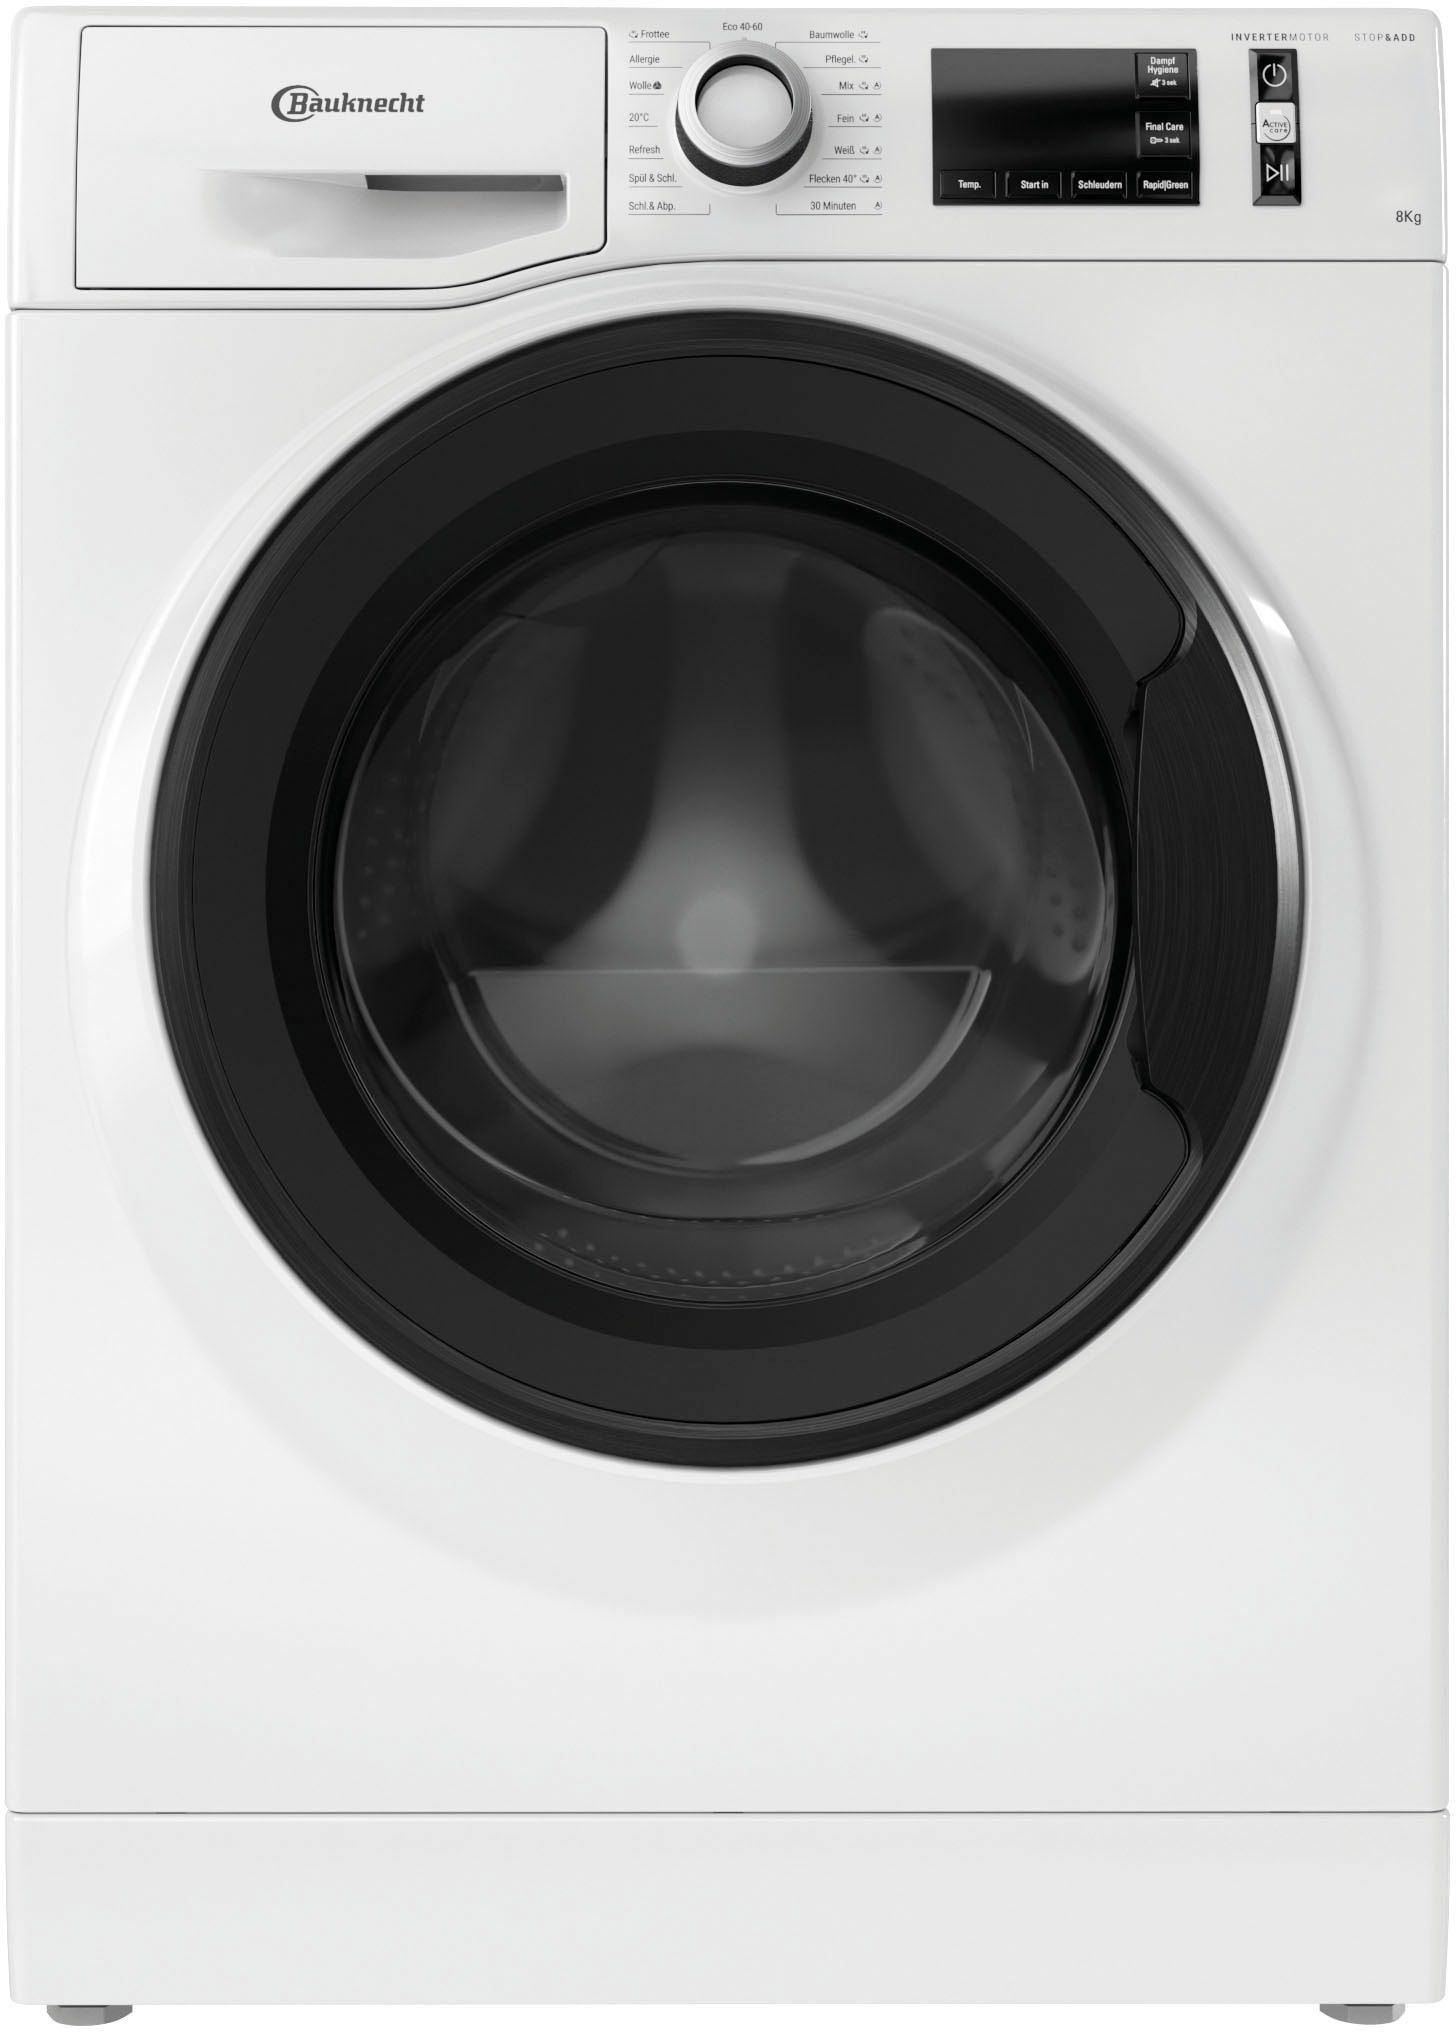 BAUKNECHT Waschmaschine, W Active 8A, kg, online U/min 1400 bei 8